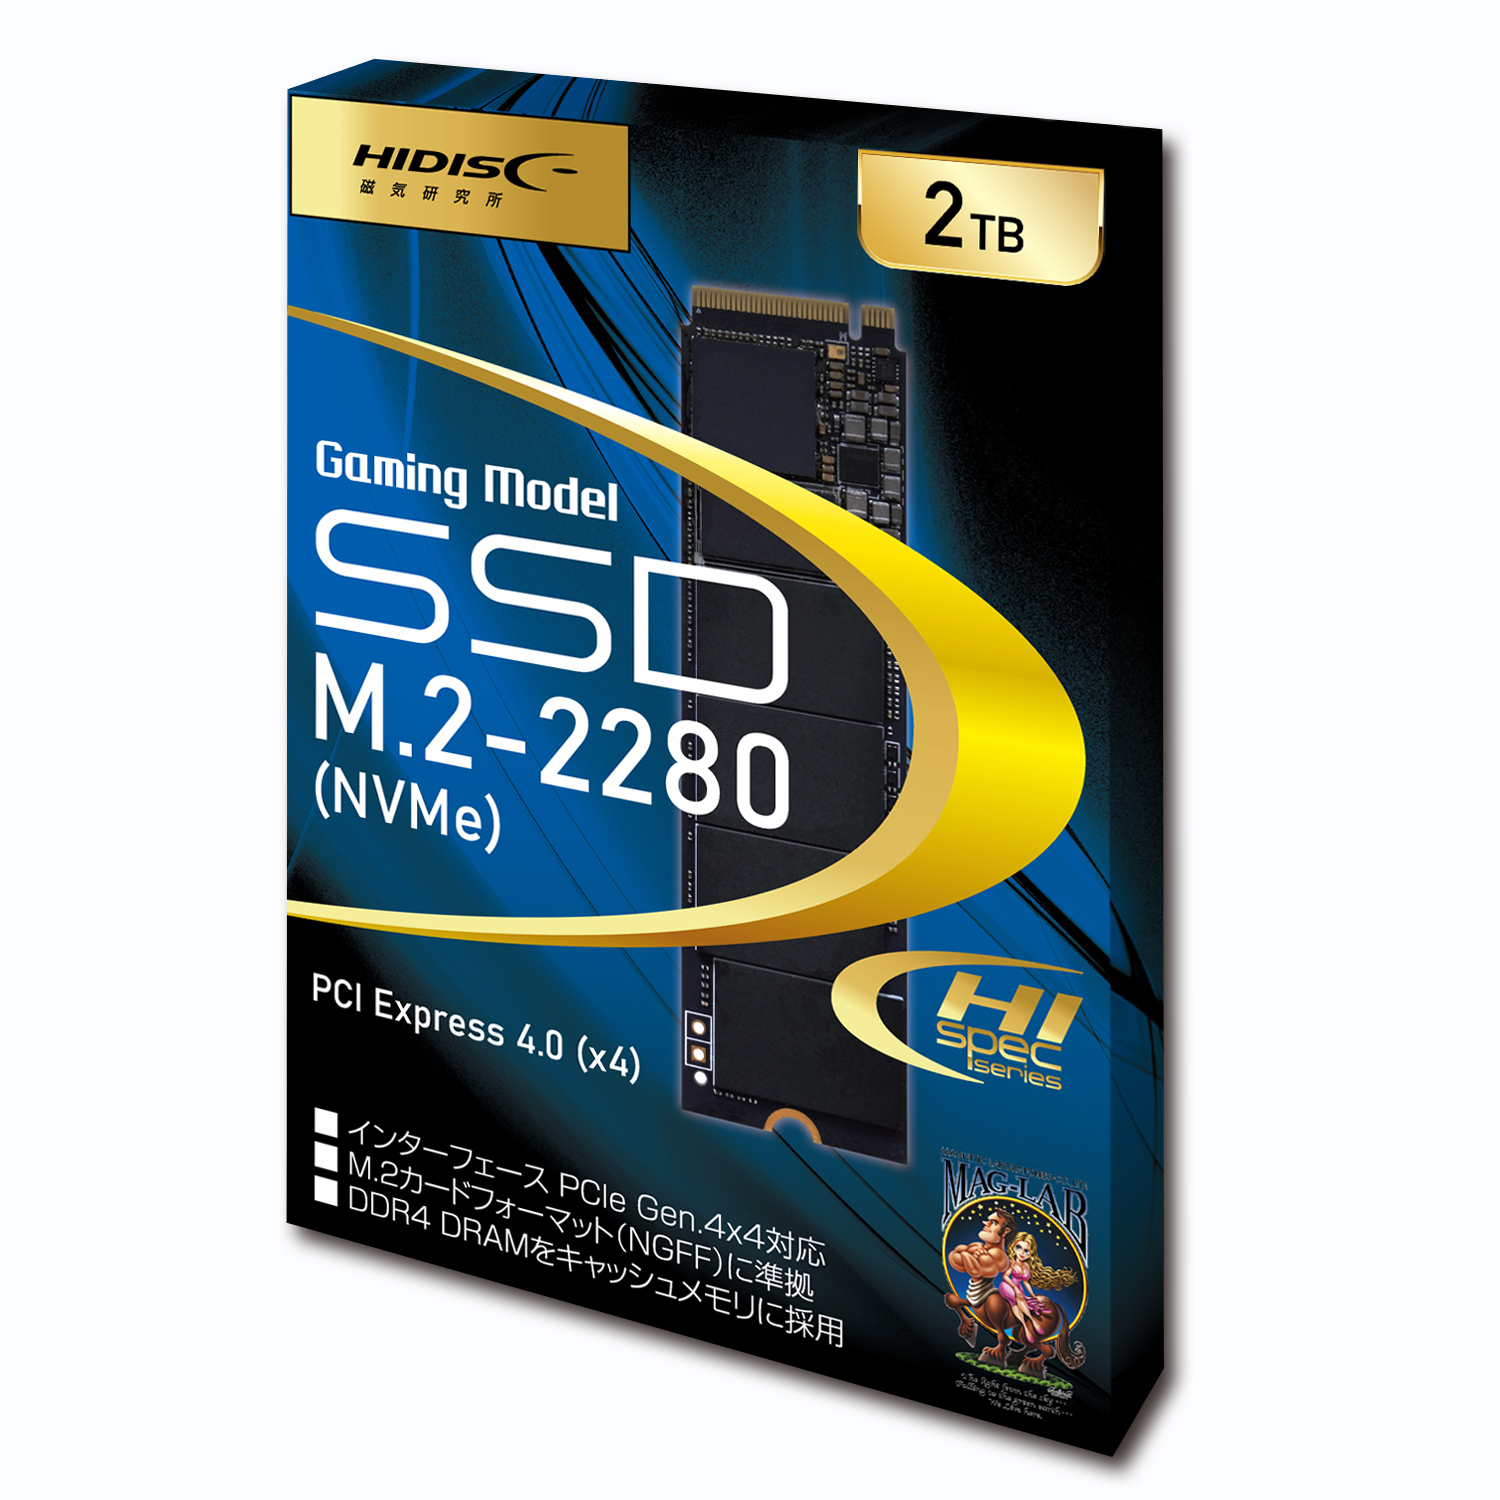 HIDISC Gaming Model SSD M.2-2280(NVMe) PCI Express4.0(x4) HDM2-E18-2TB